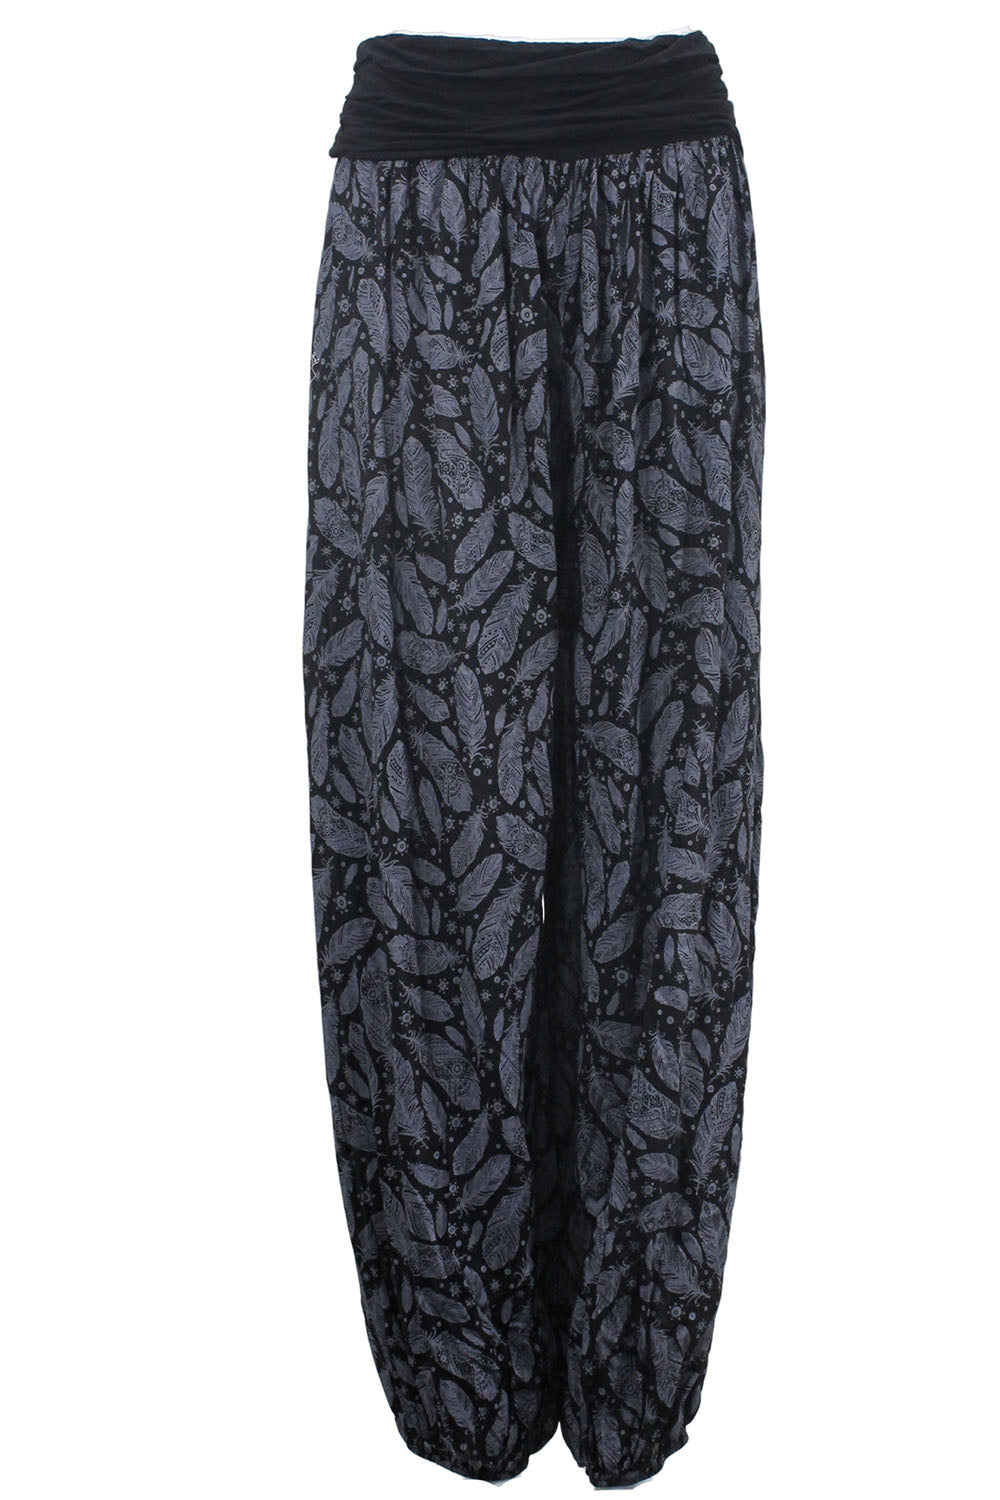 Feather Print Harem Yoga Pants - Black